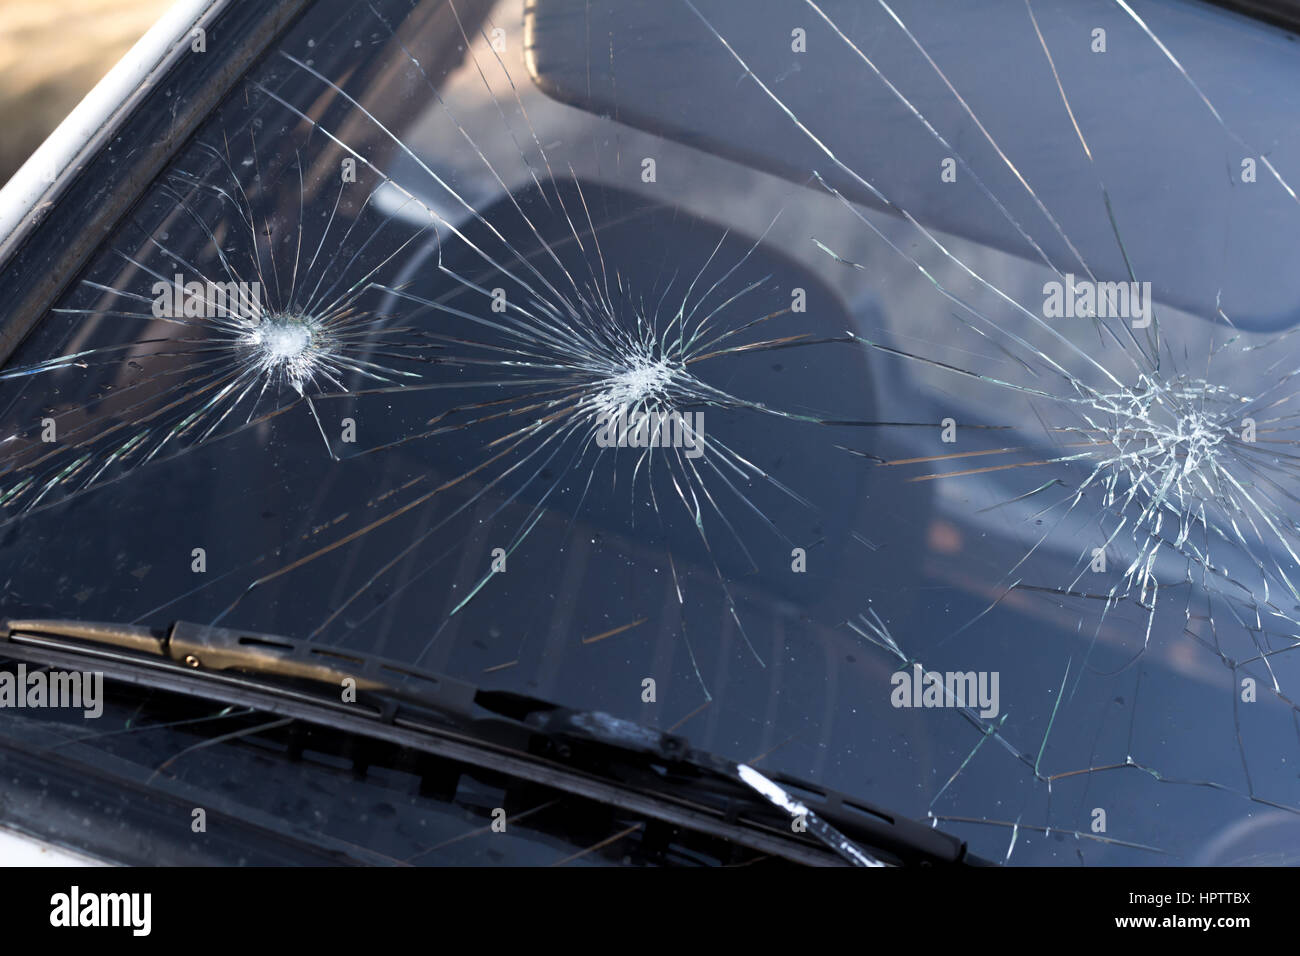 broken windshield on car Stock Photo